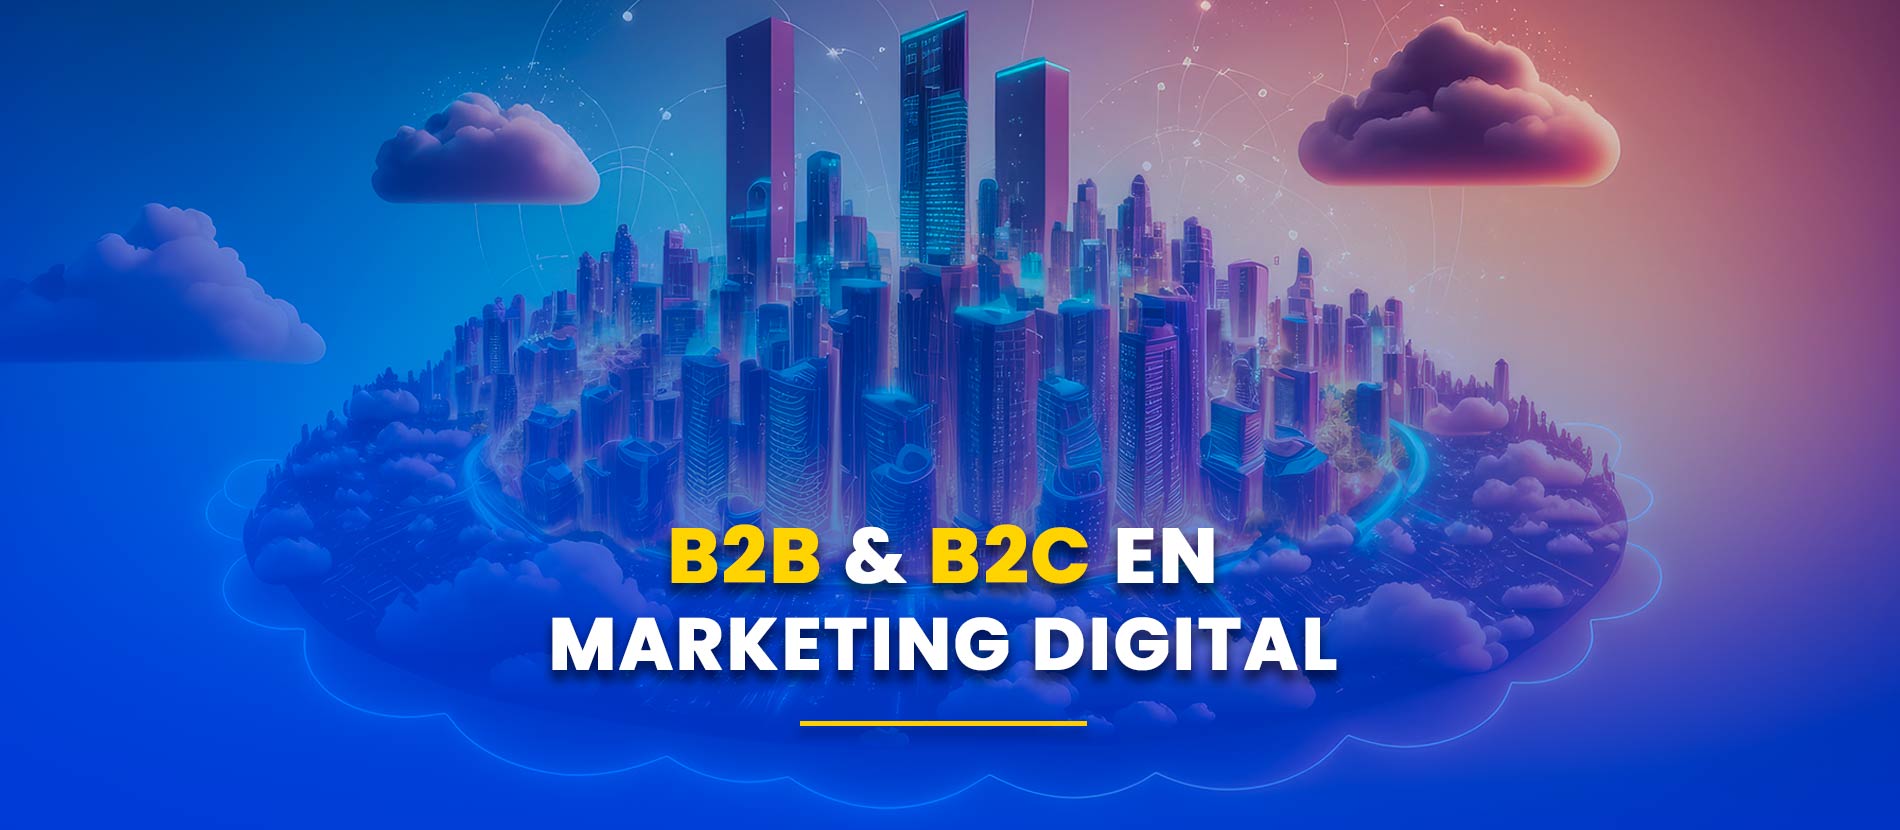 🚀 B2B y B2C en Marketing Digital: Estrategias Claves para Cada Segmento